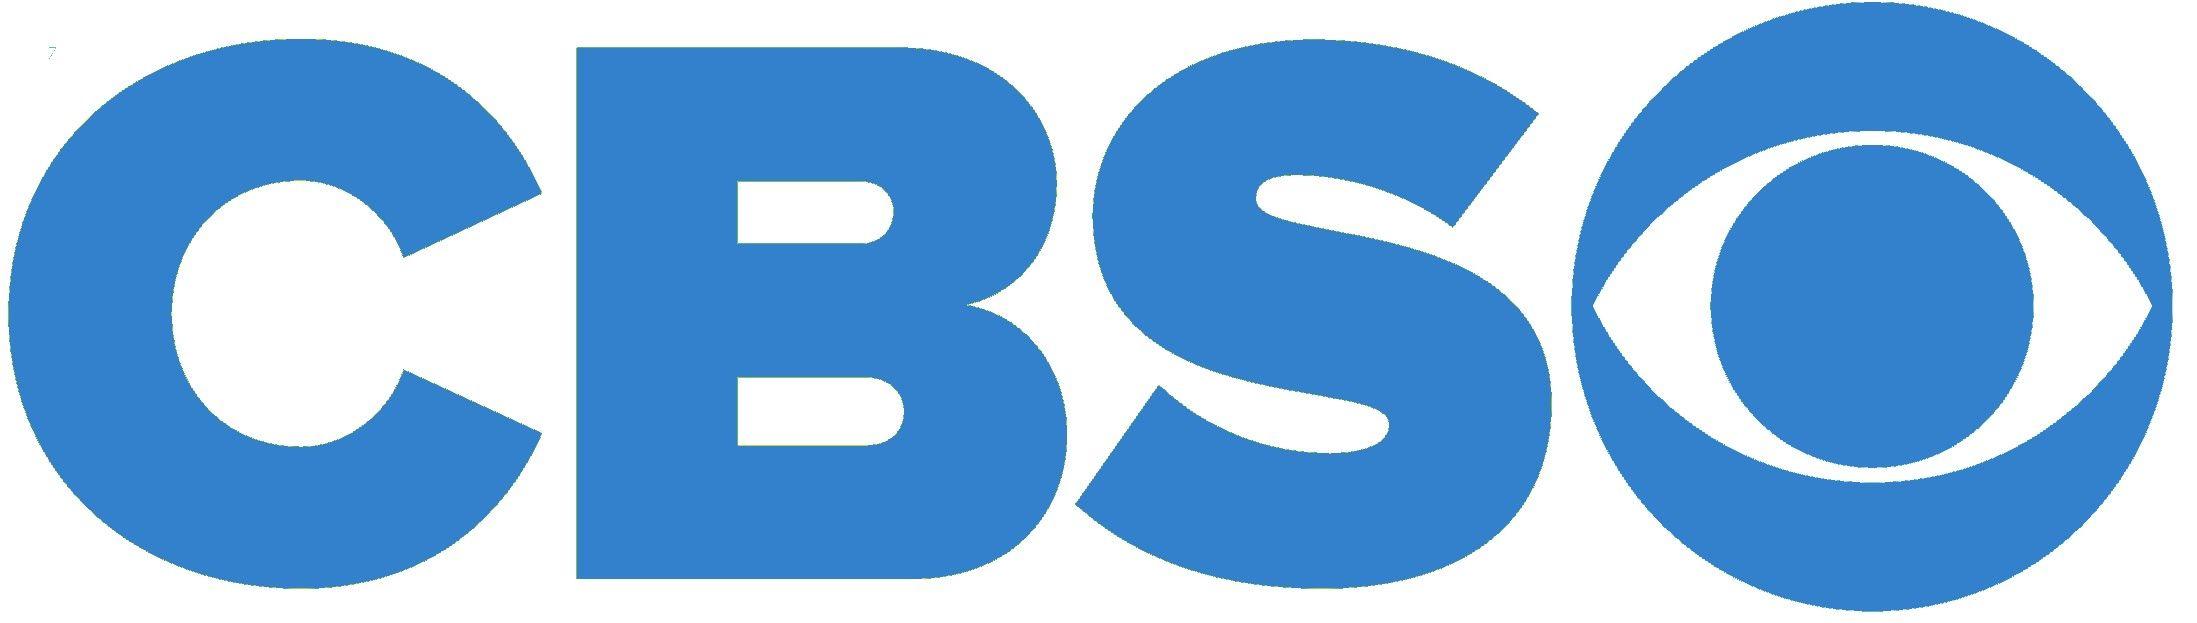 CBS Logo - CBS Logo Marcha Berkeley